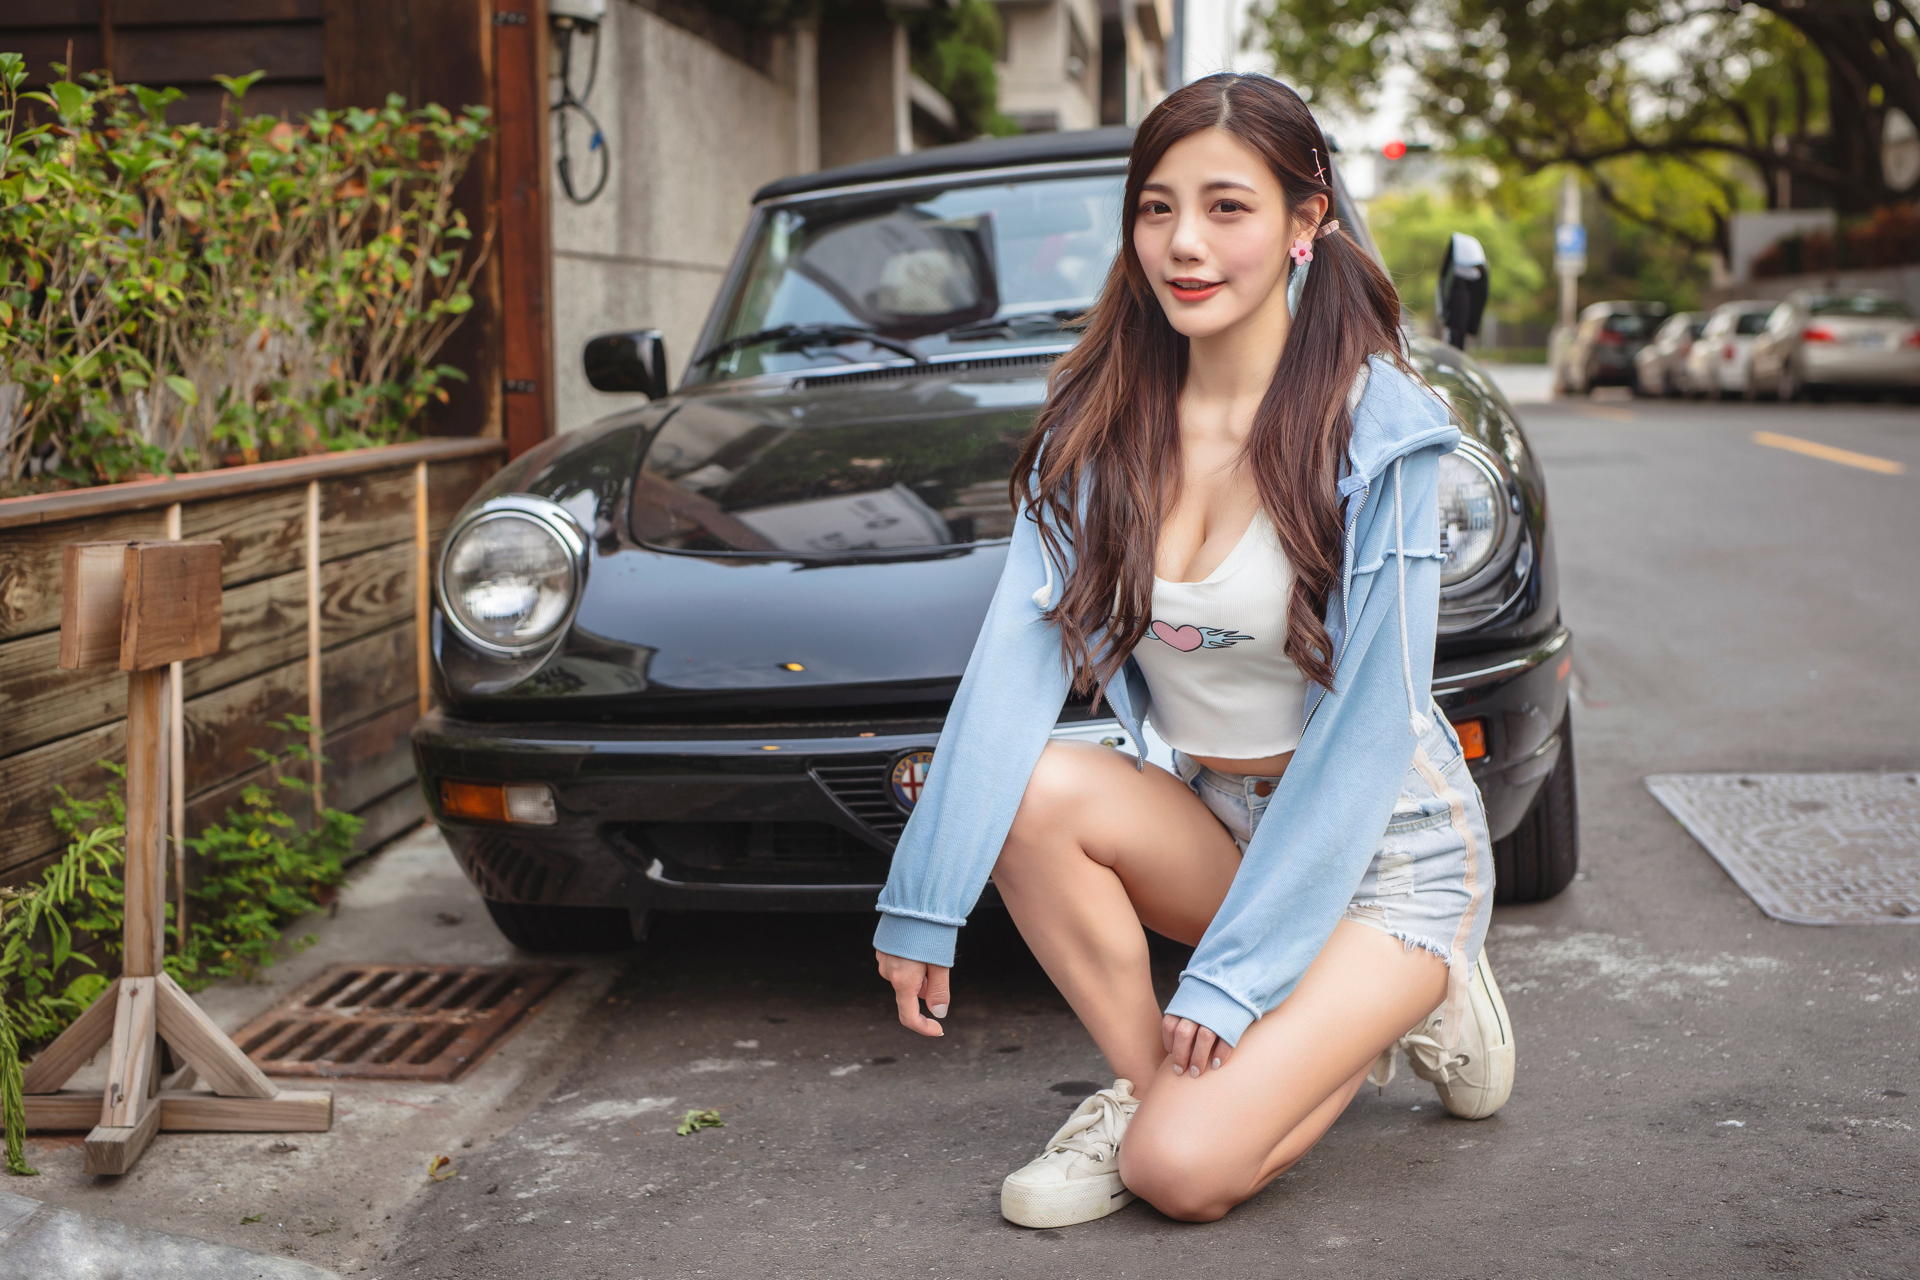 Asian Model Women Long Hair Dark Hair Car Twintails Short Tops Hooded Jacket Shorts Jeans Sneakers D 1920x1280